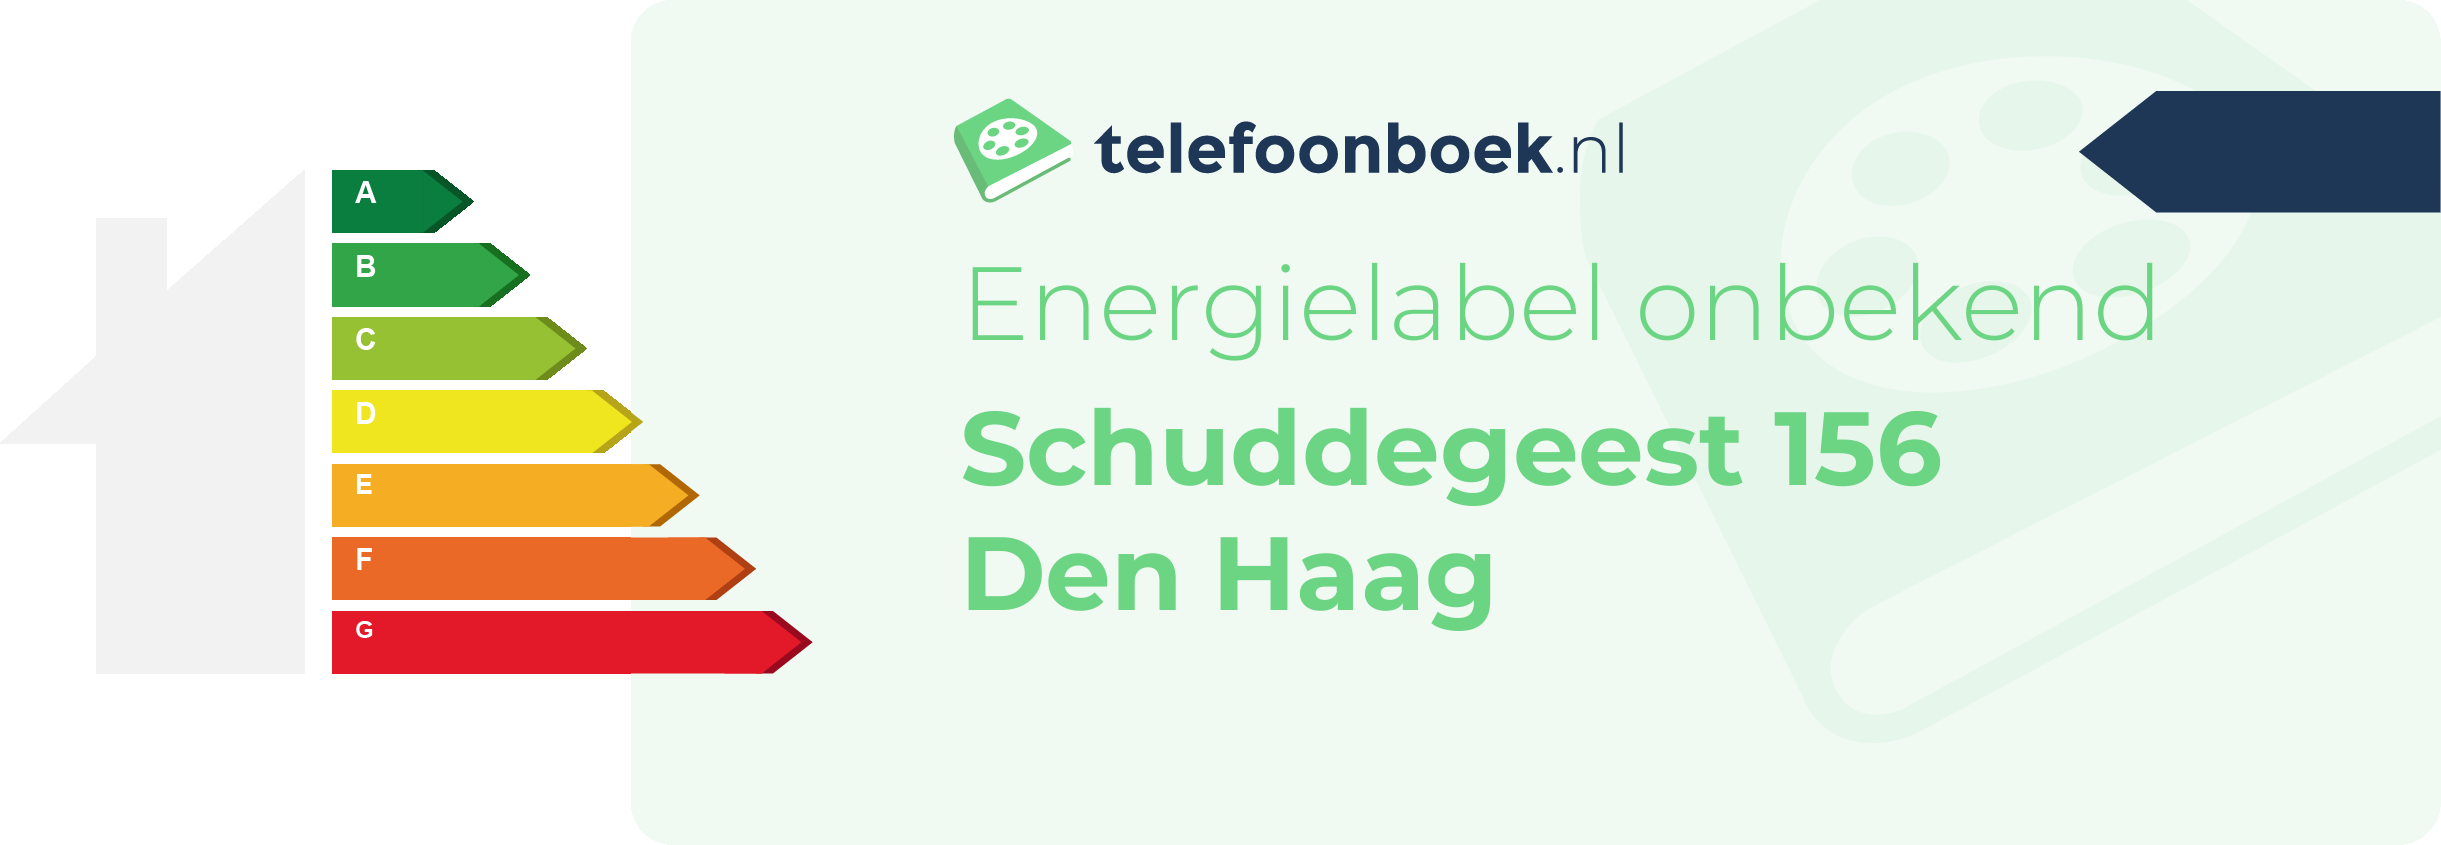 Energielabel Schuddegeest 156 Den Haag